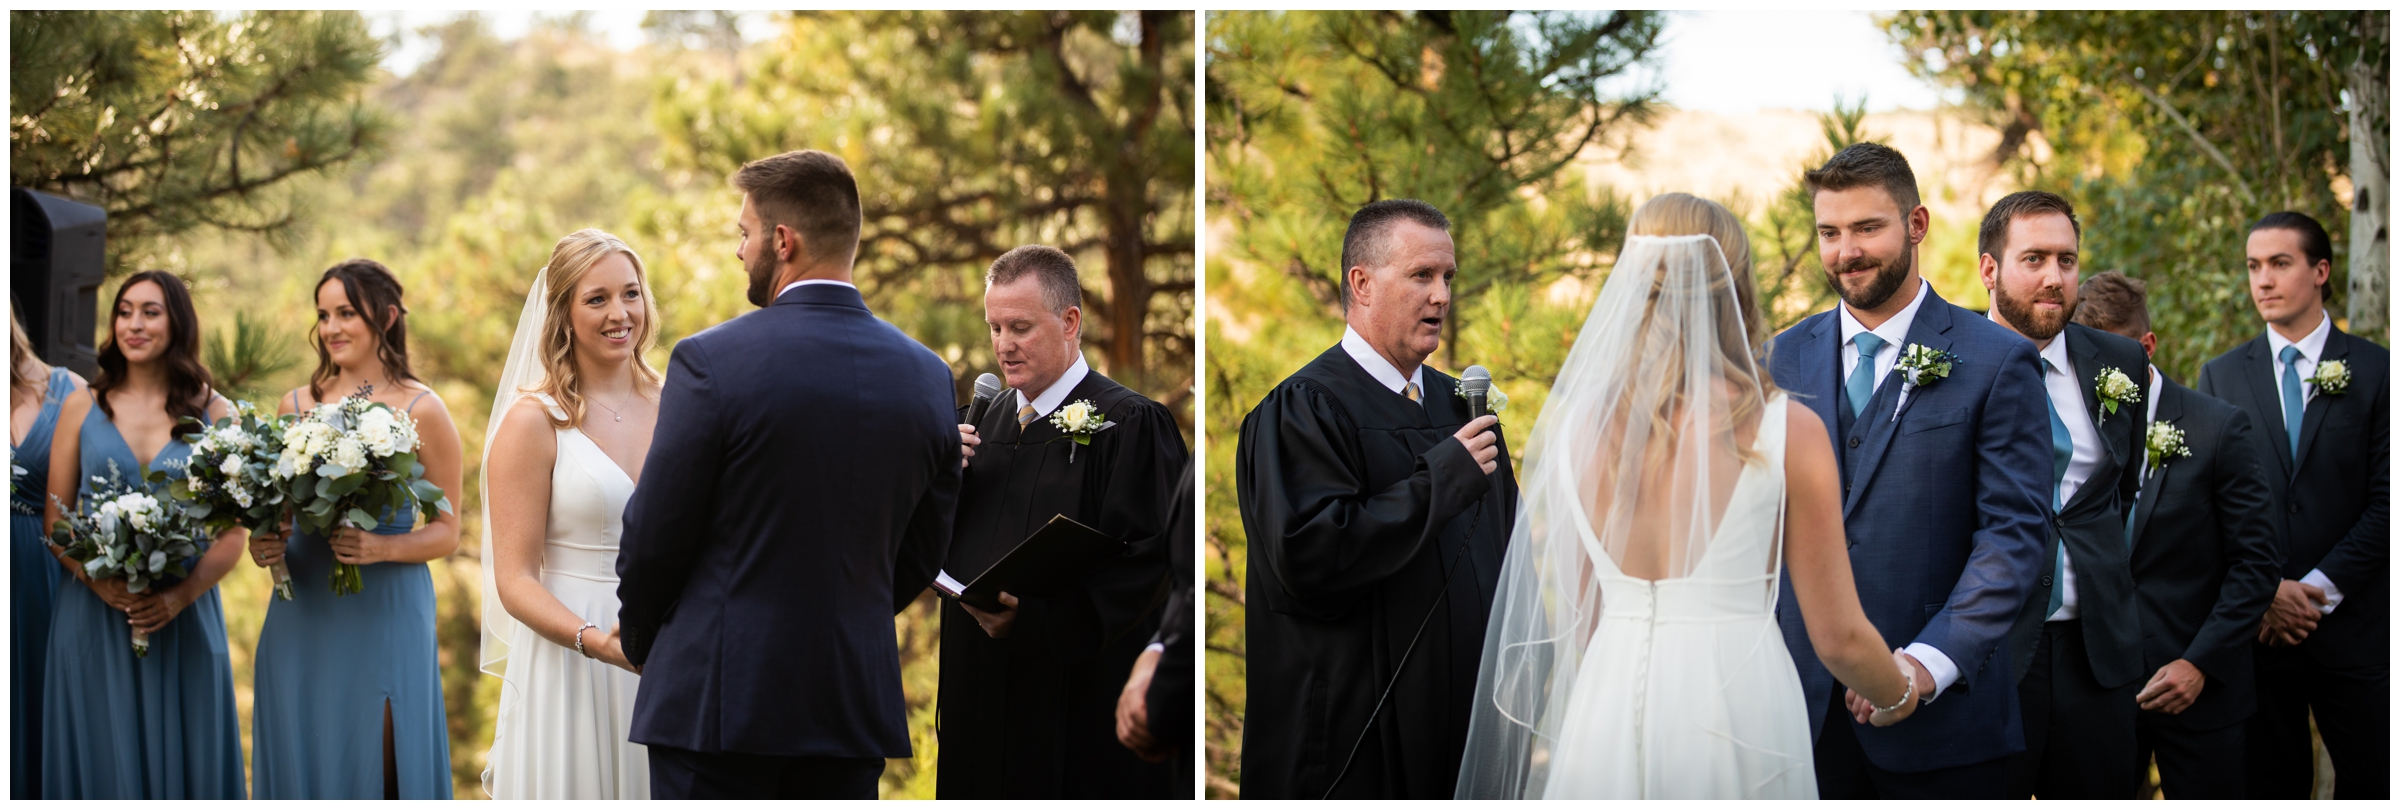 bride and groom saying vows during outdoor wedding ceremony in Lyons Colorado